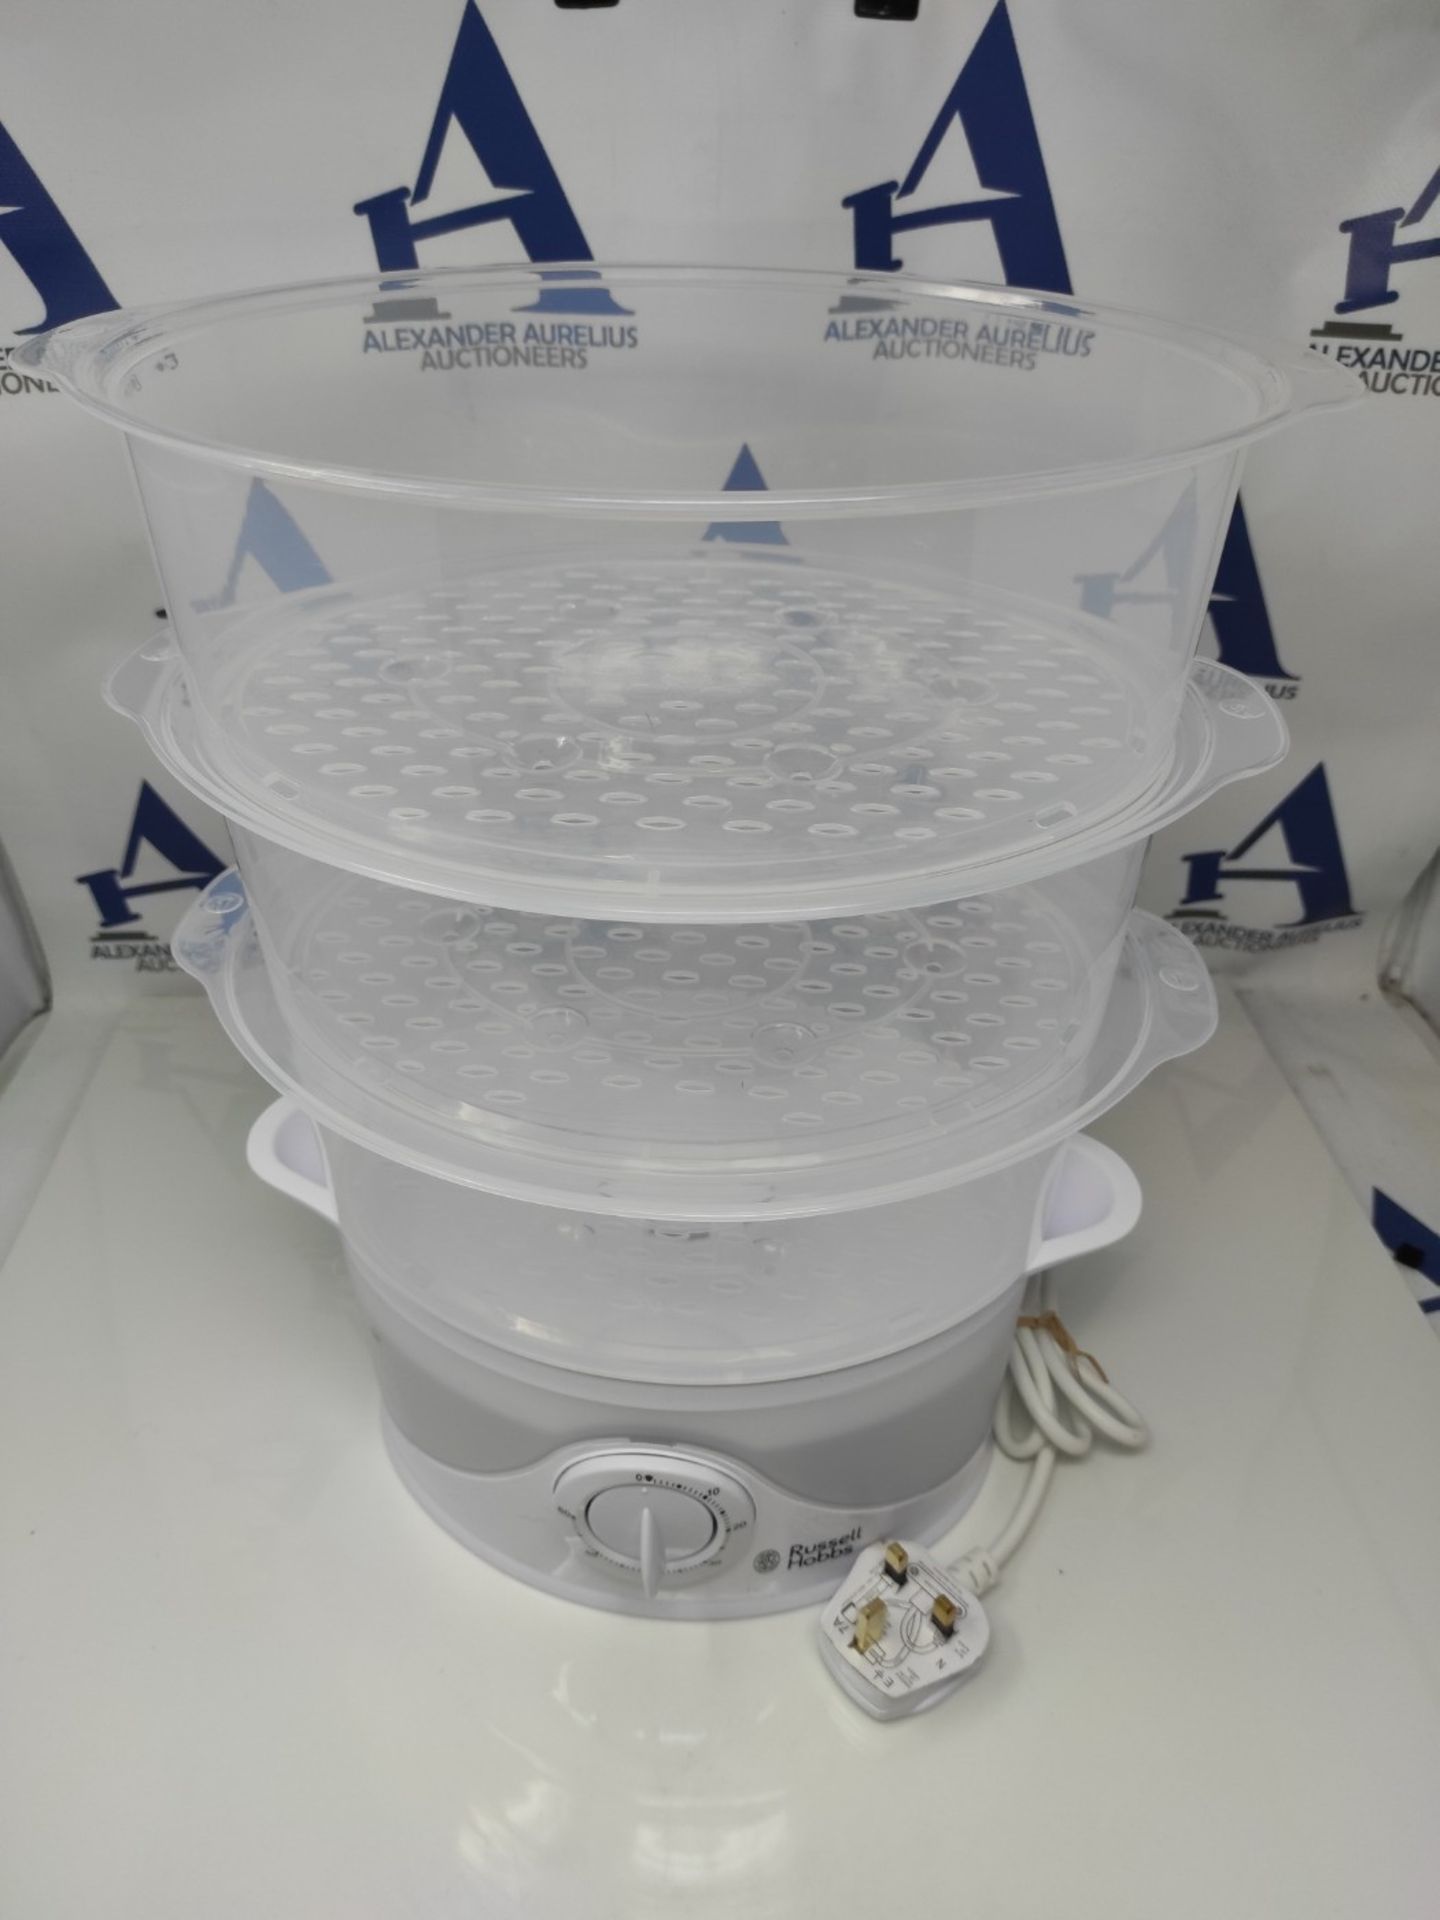 Russell Hobbs 3 Tier Electric Food Steamer, 9L, Dishwasher safe BPA free baskets, Stac - Image 3 of 3